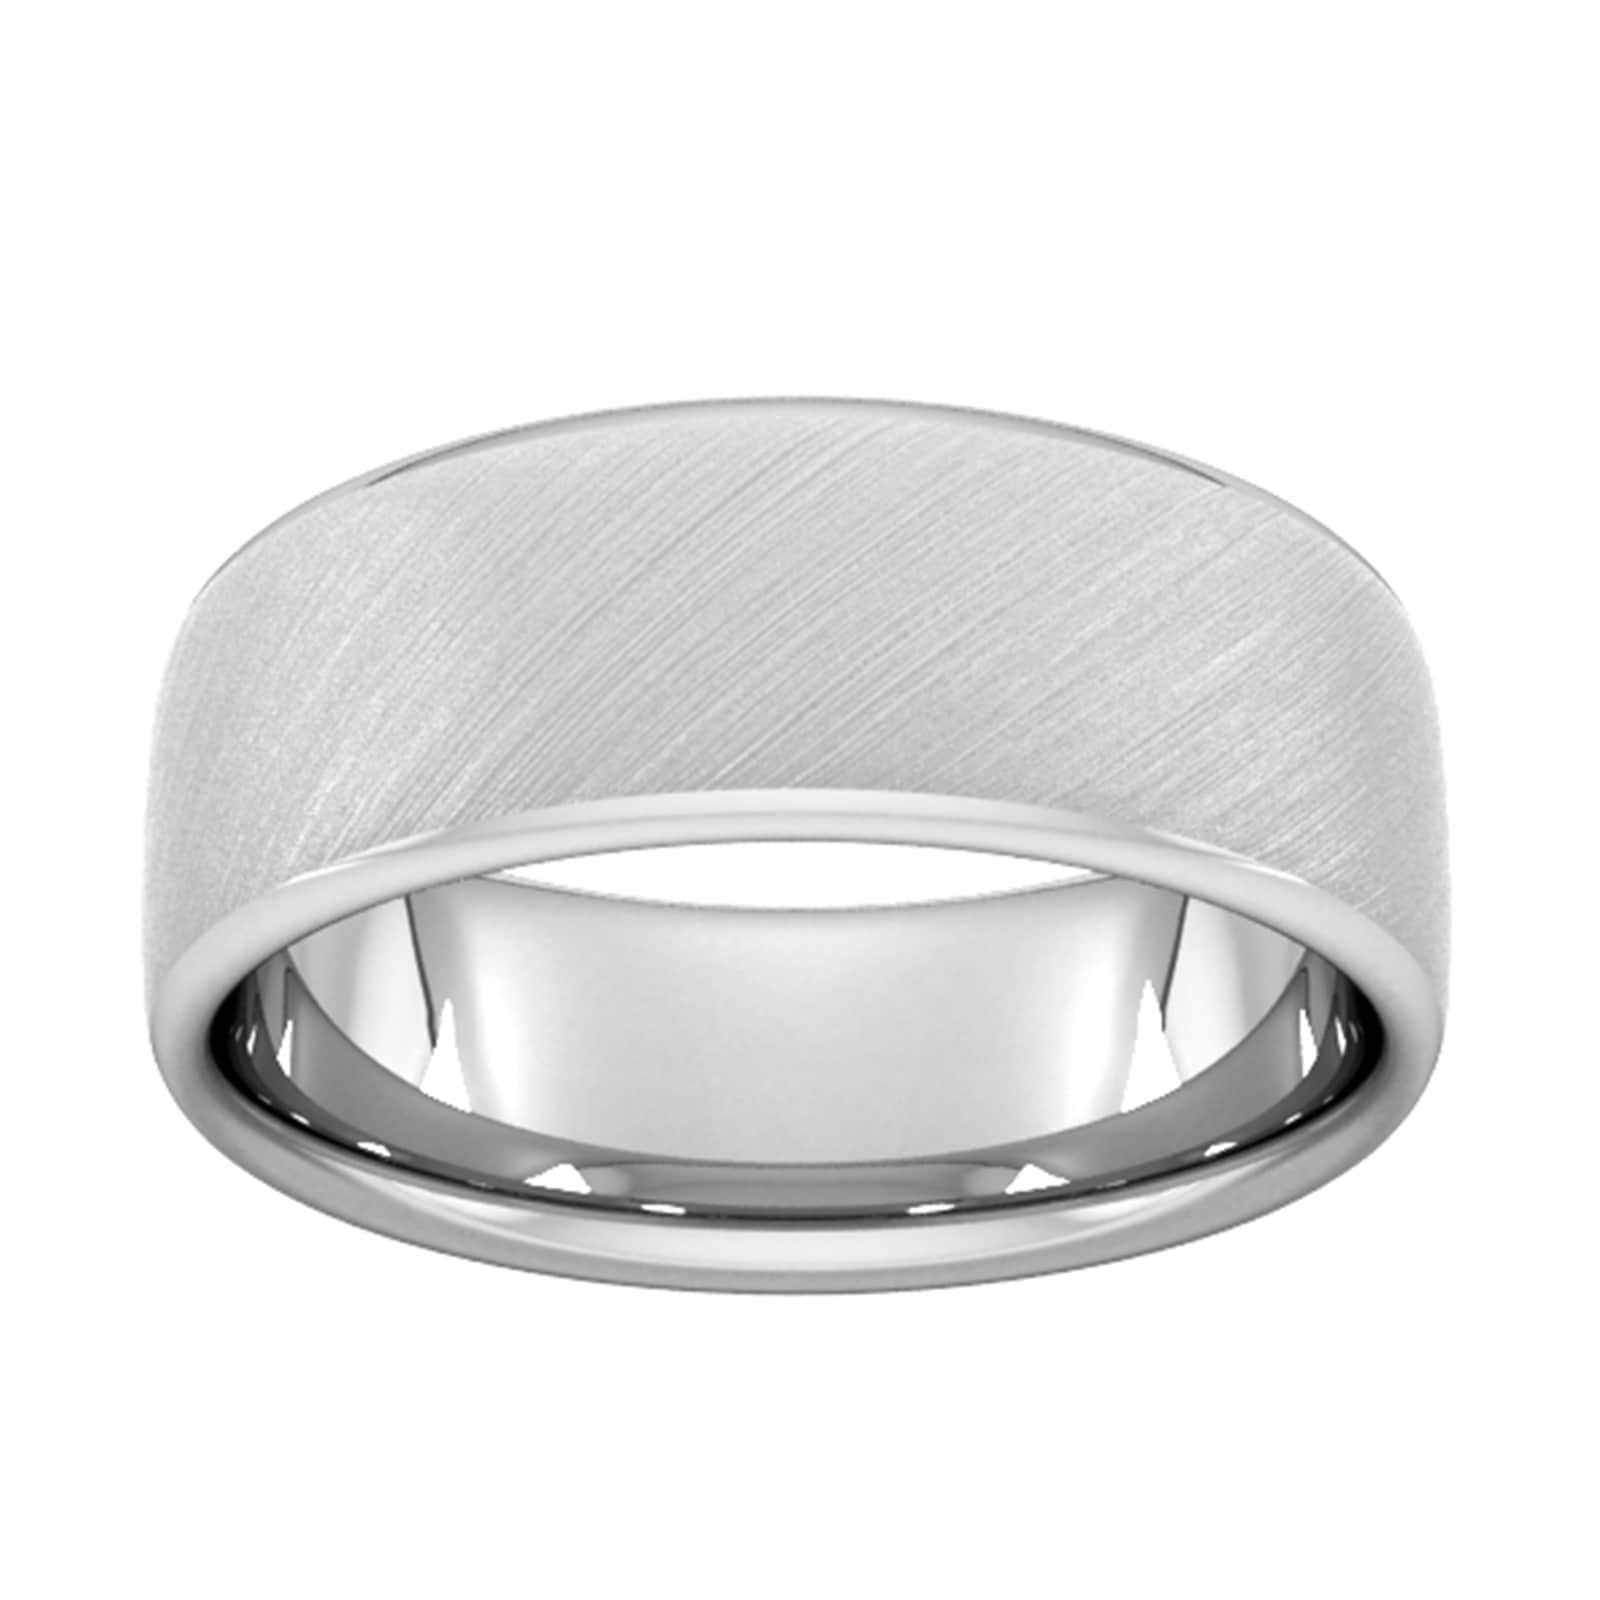 8mm Slight Court Standard Diagonal Matt Finish Wedding Ring In 18 Carat White Gold - Ring Size O